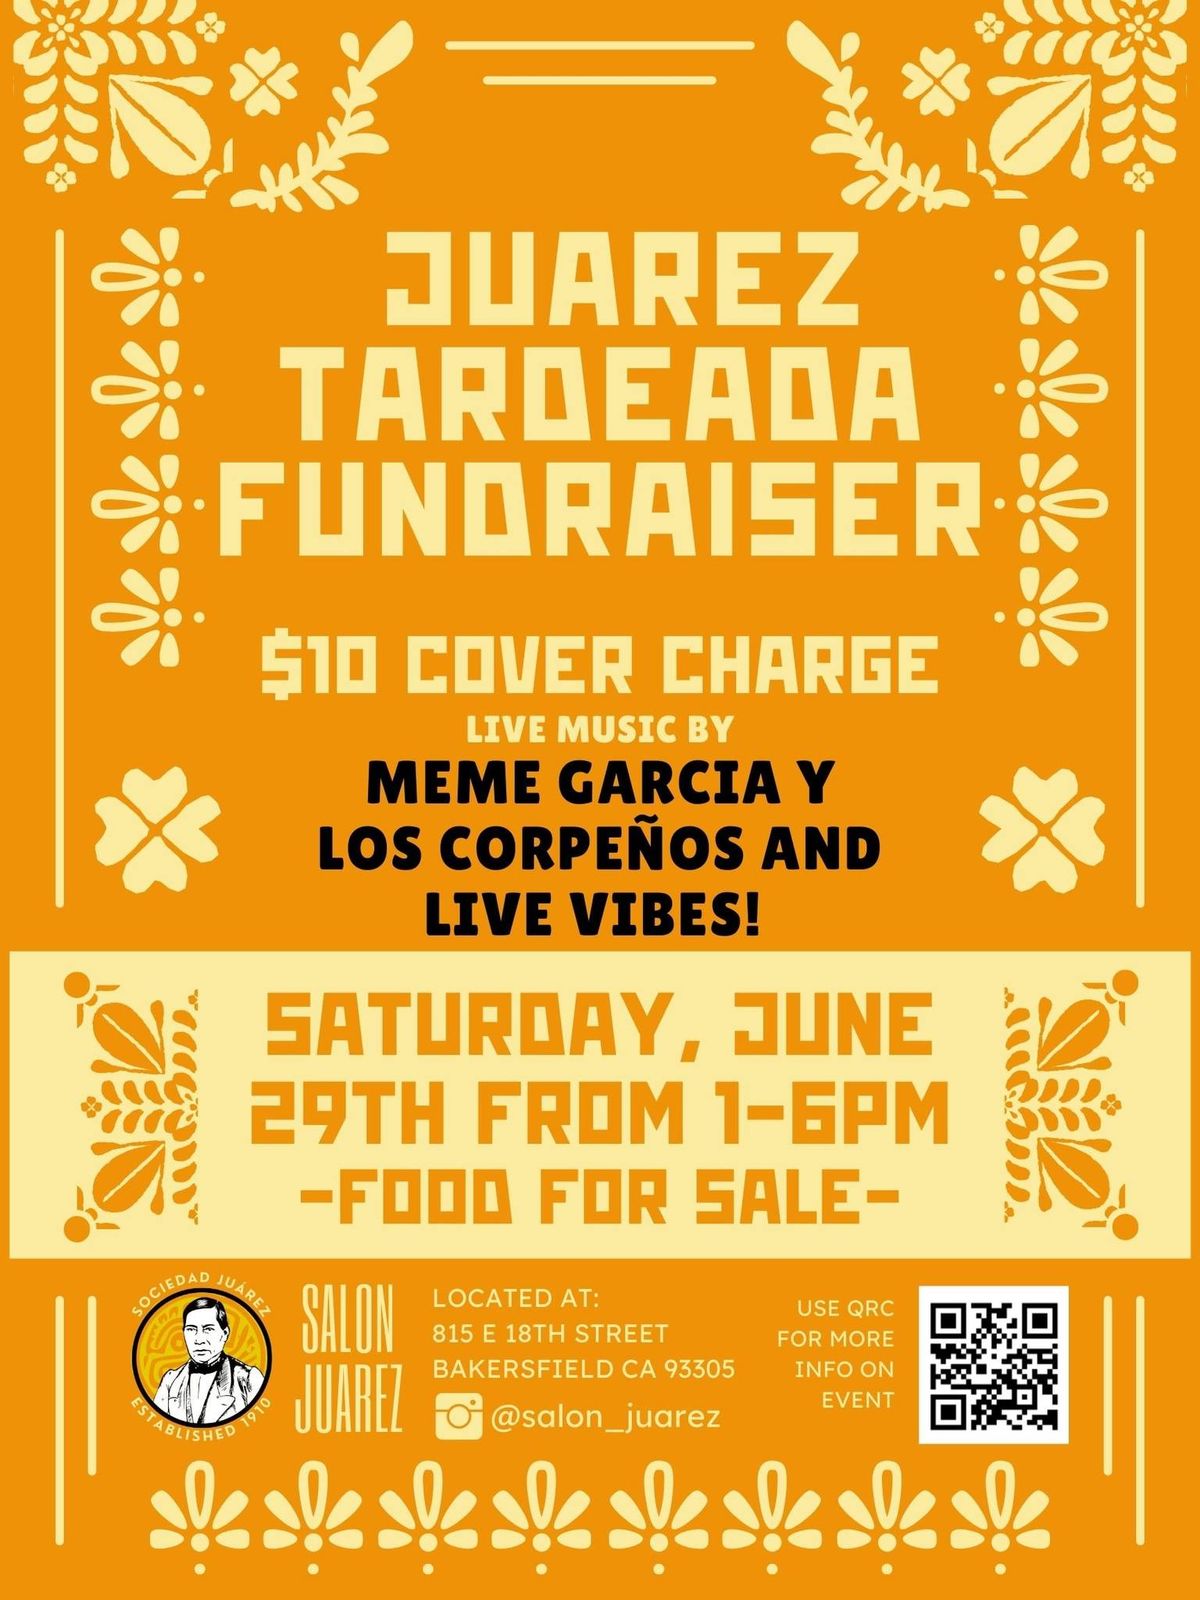 Juarez Tardeada Fundraiser! 